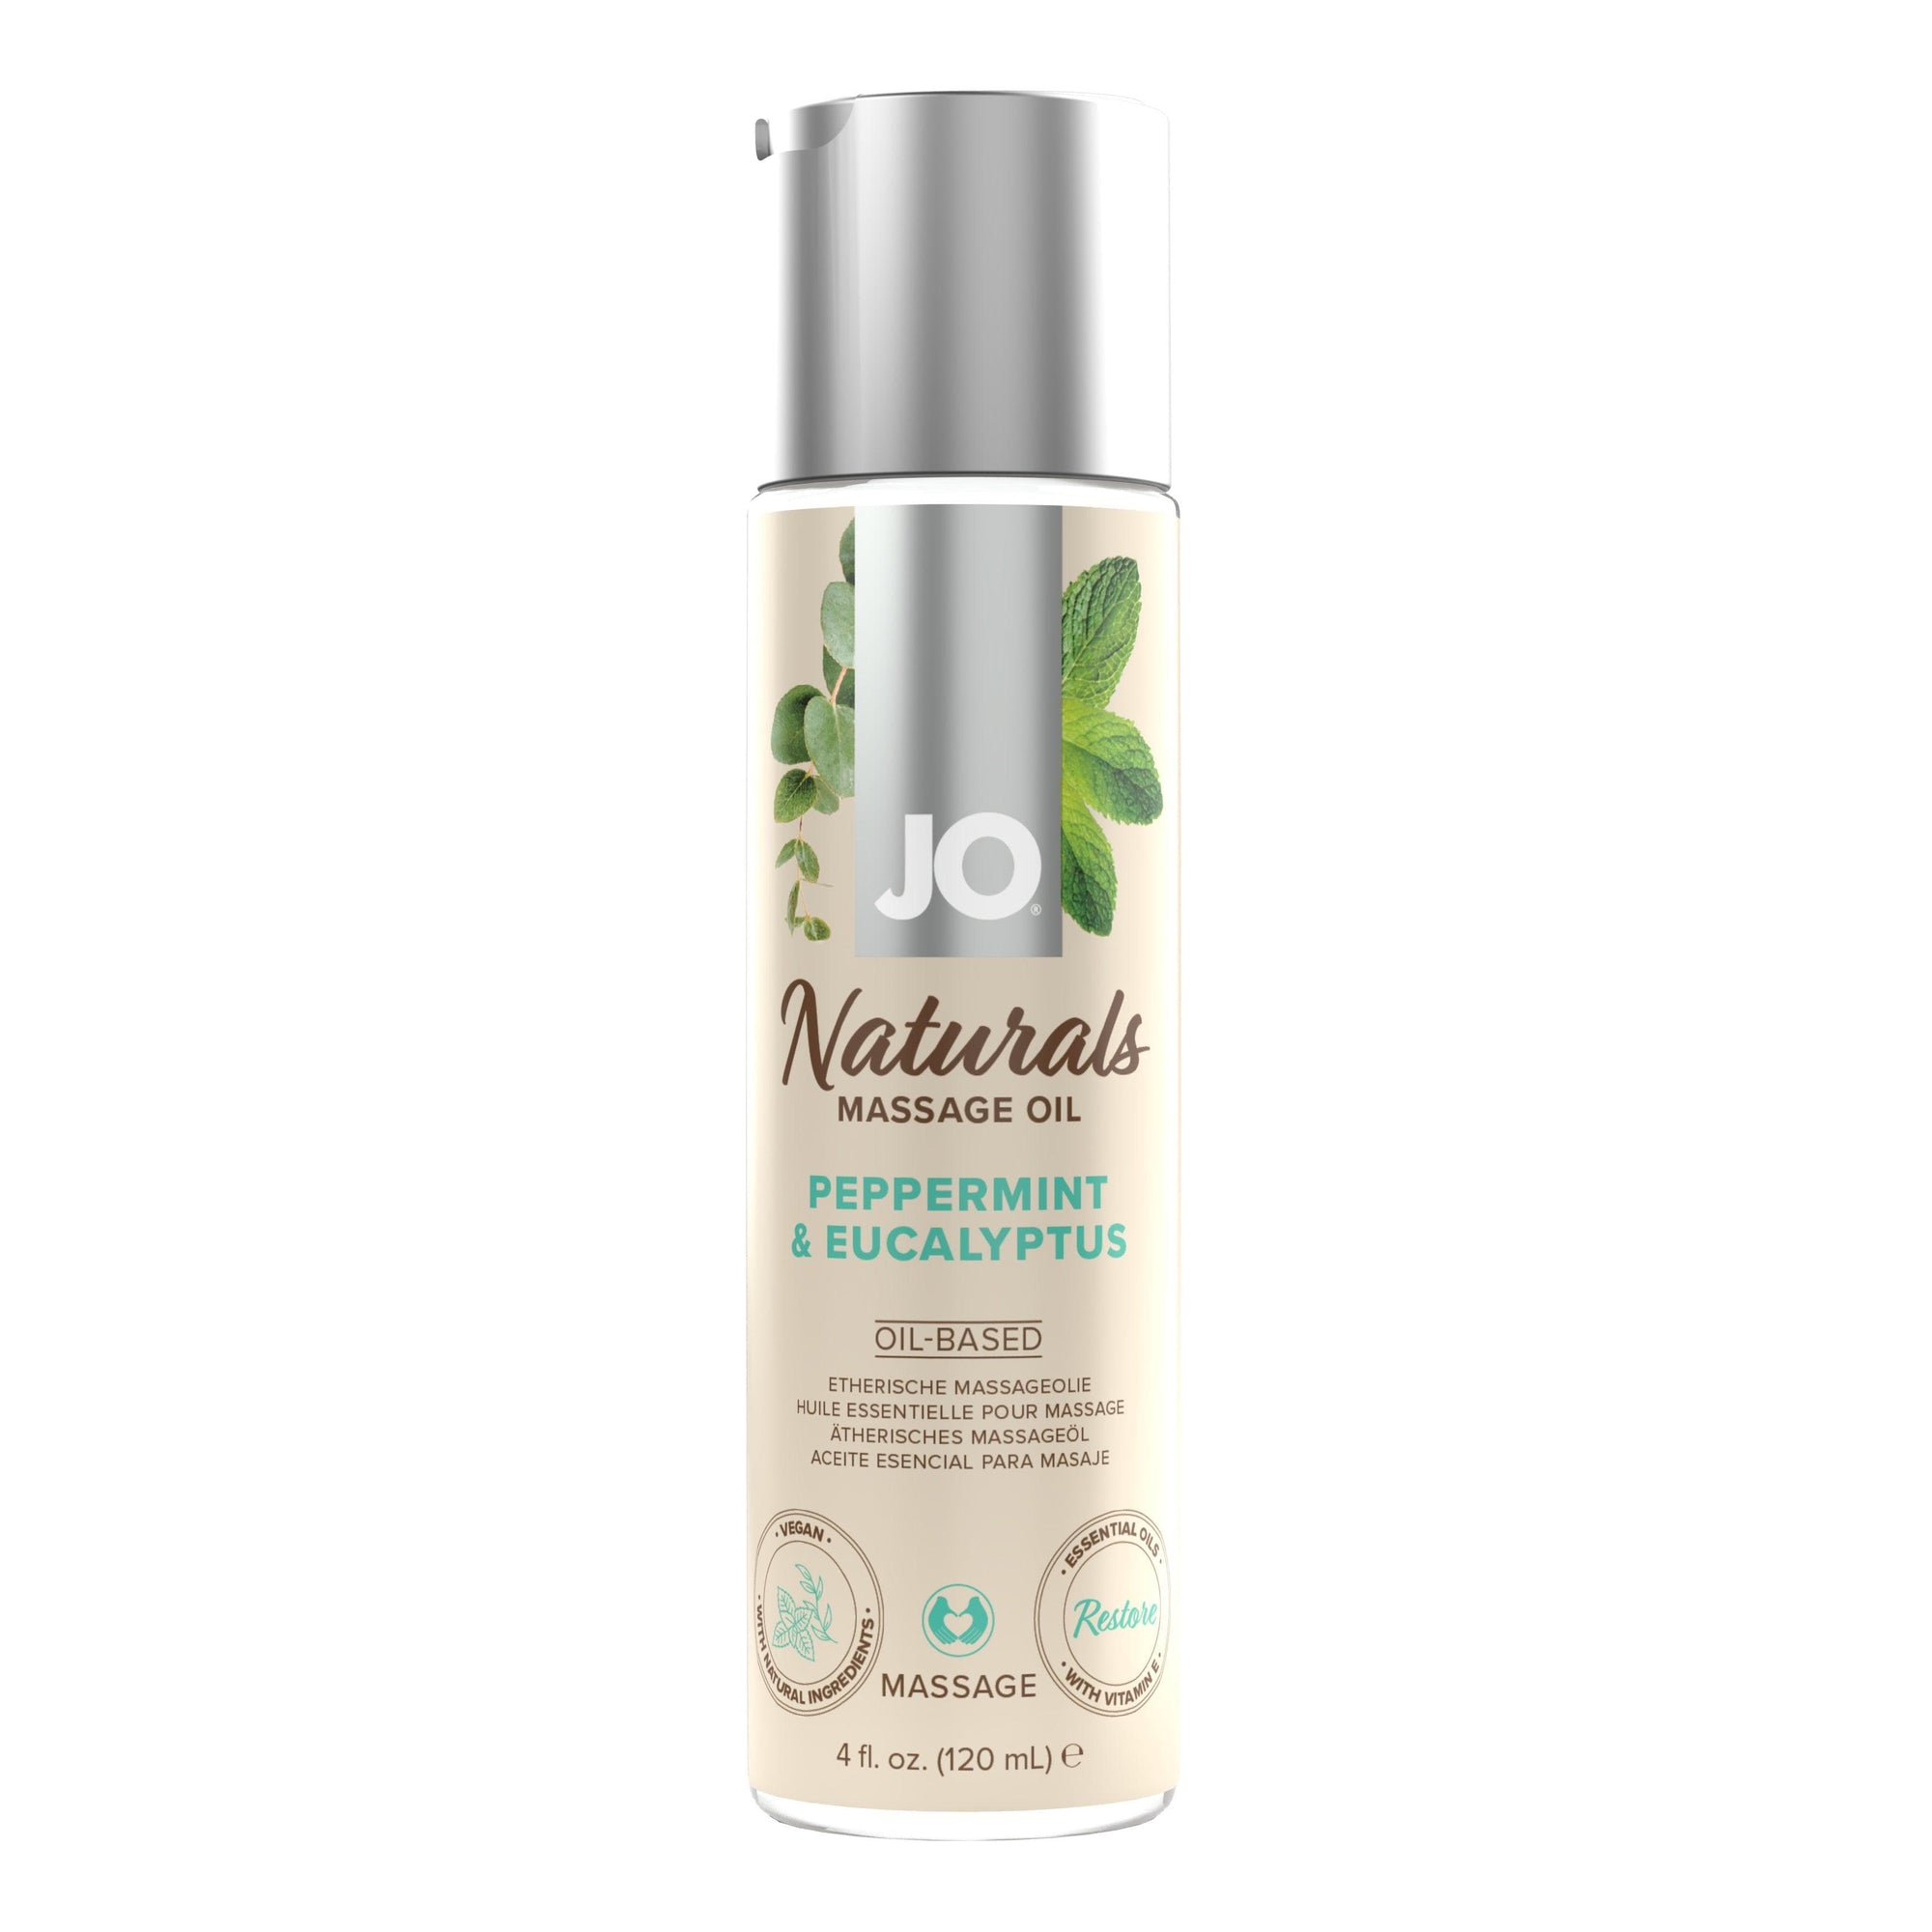 JO Naturals Peppermint & Eucalyptus Massage Oil 4oz - Romantic Blessings